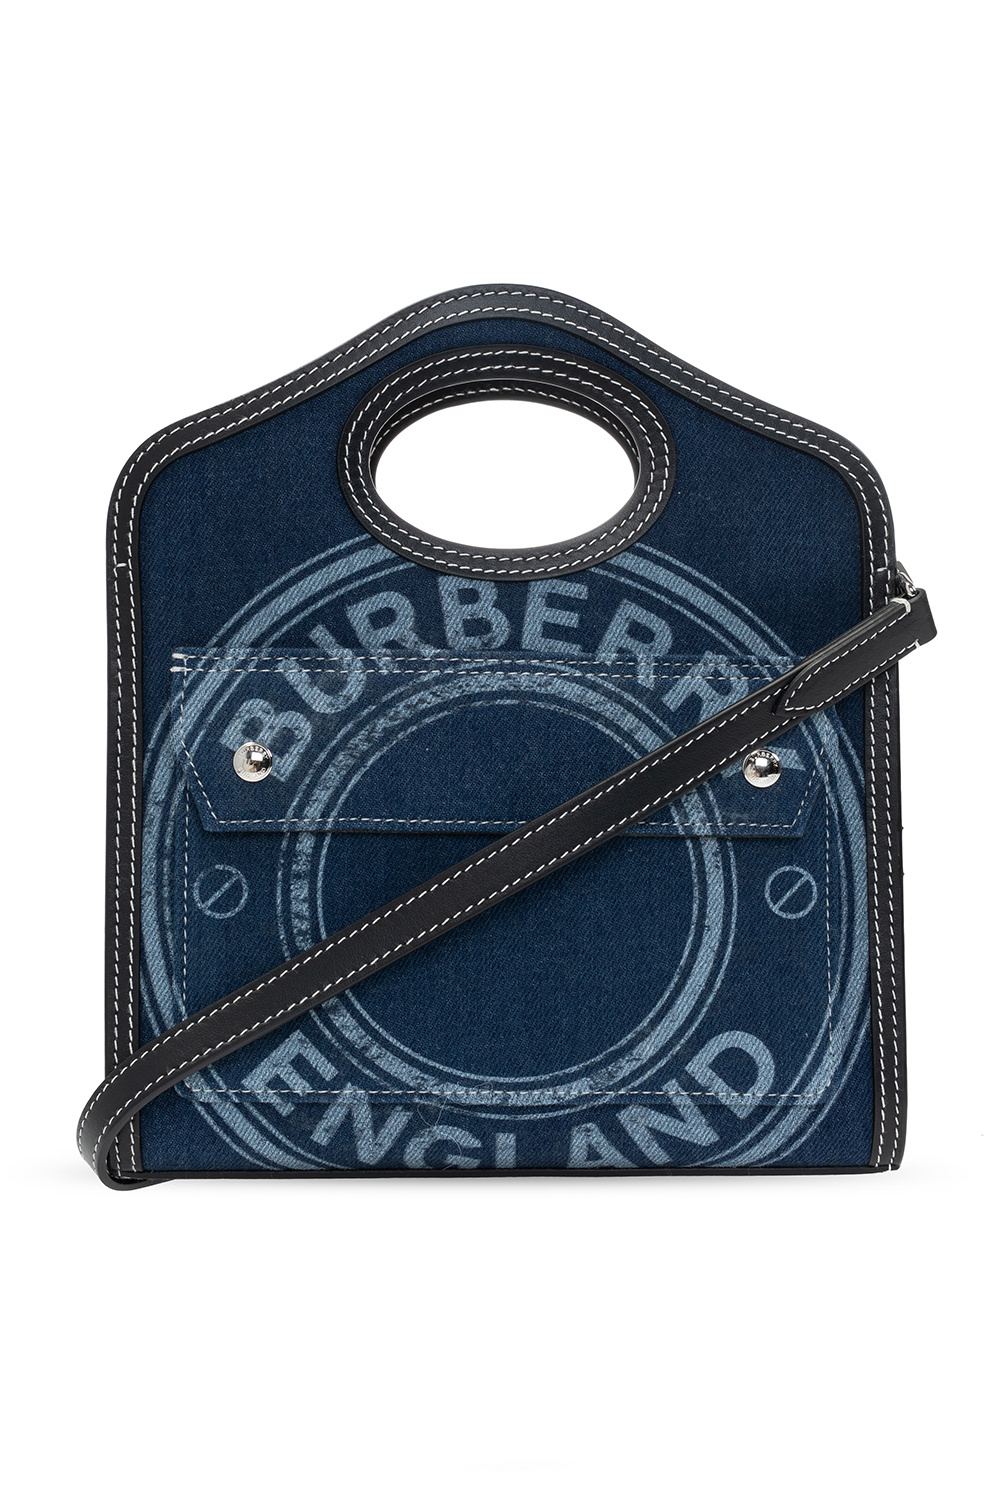 shoulder bag with logo burberry bag dark canvas blue